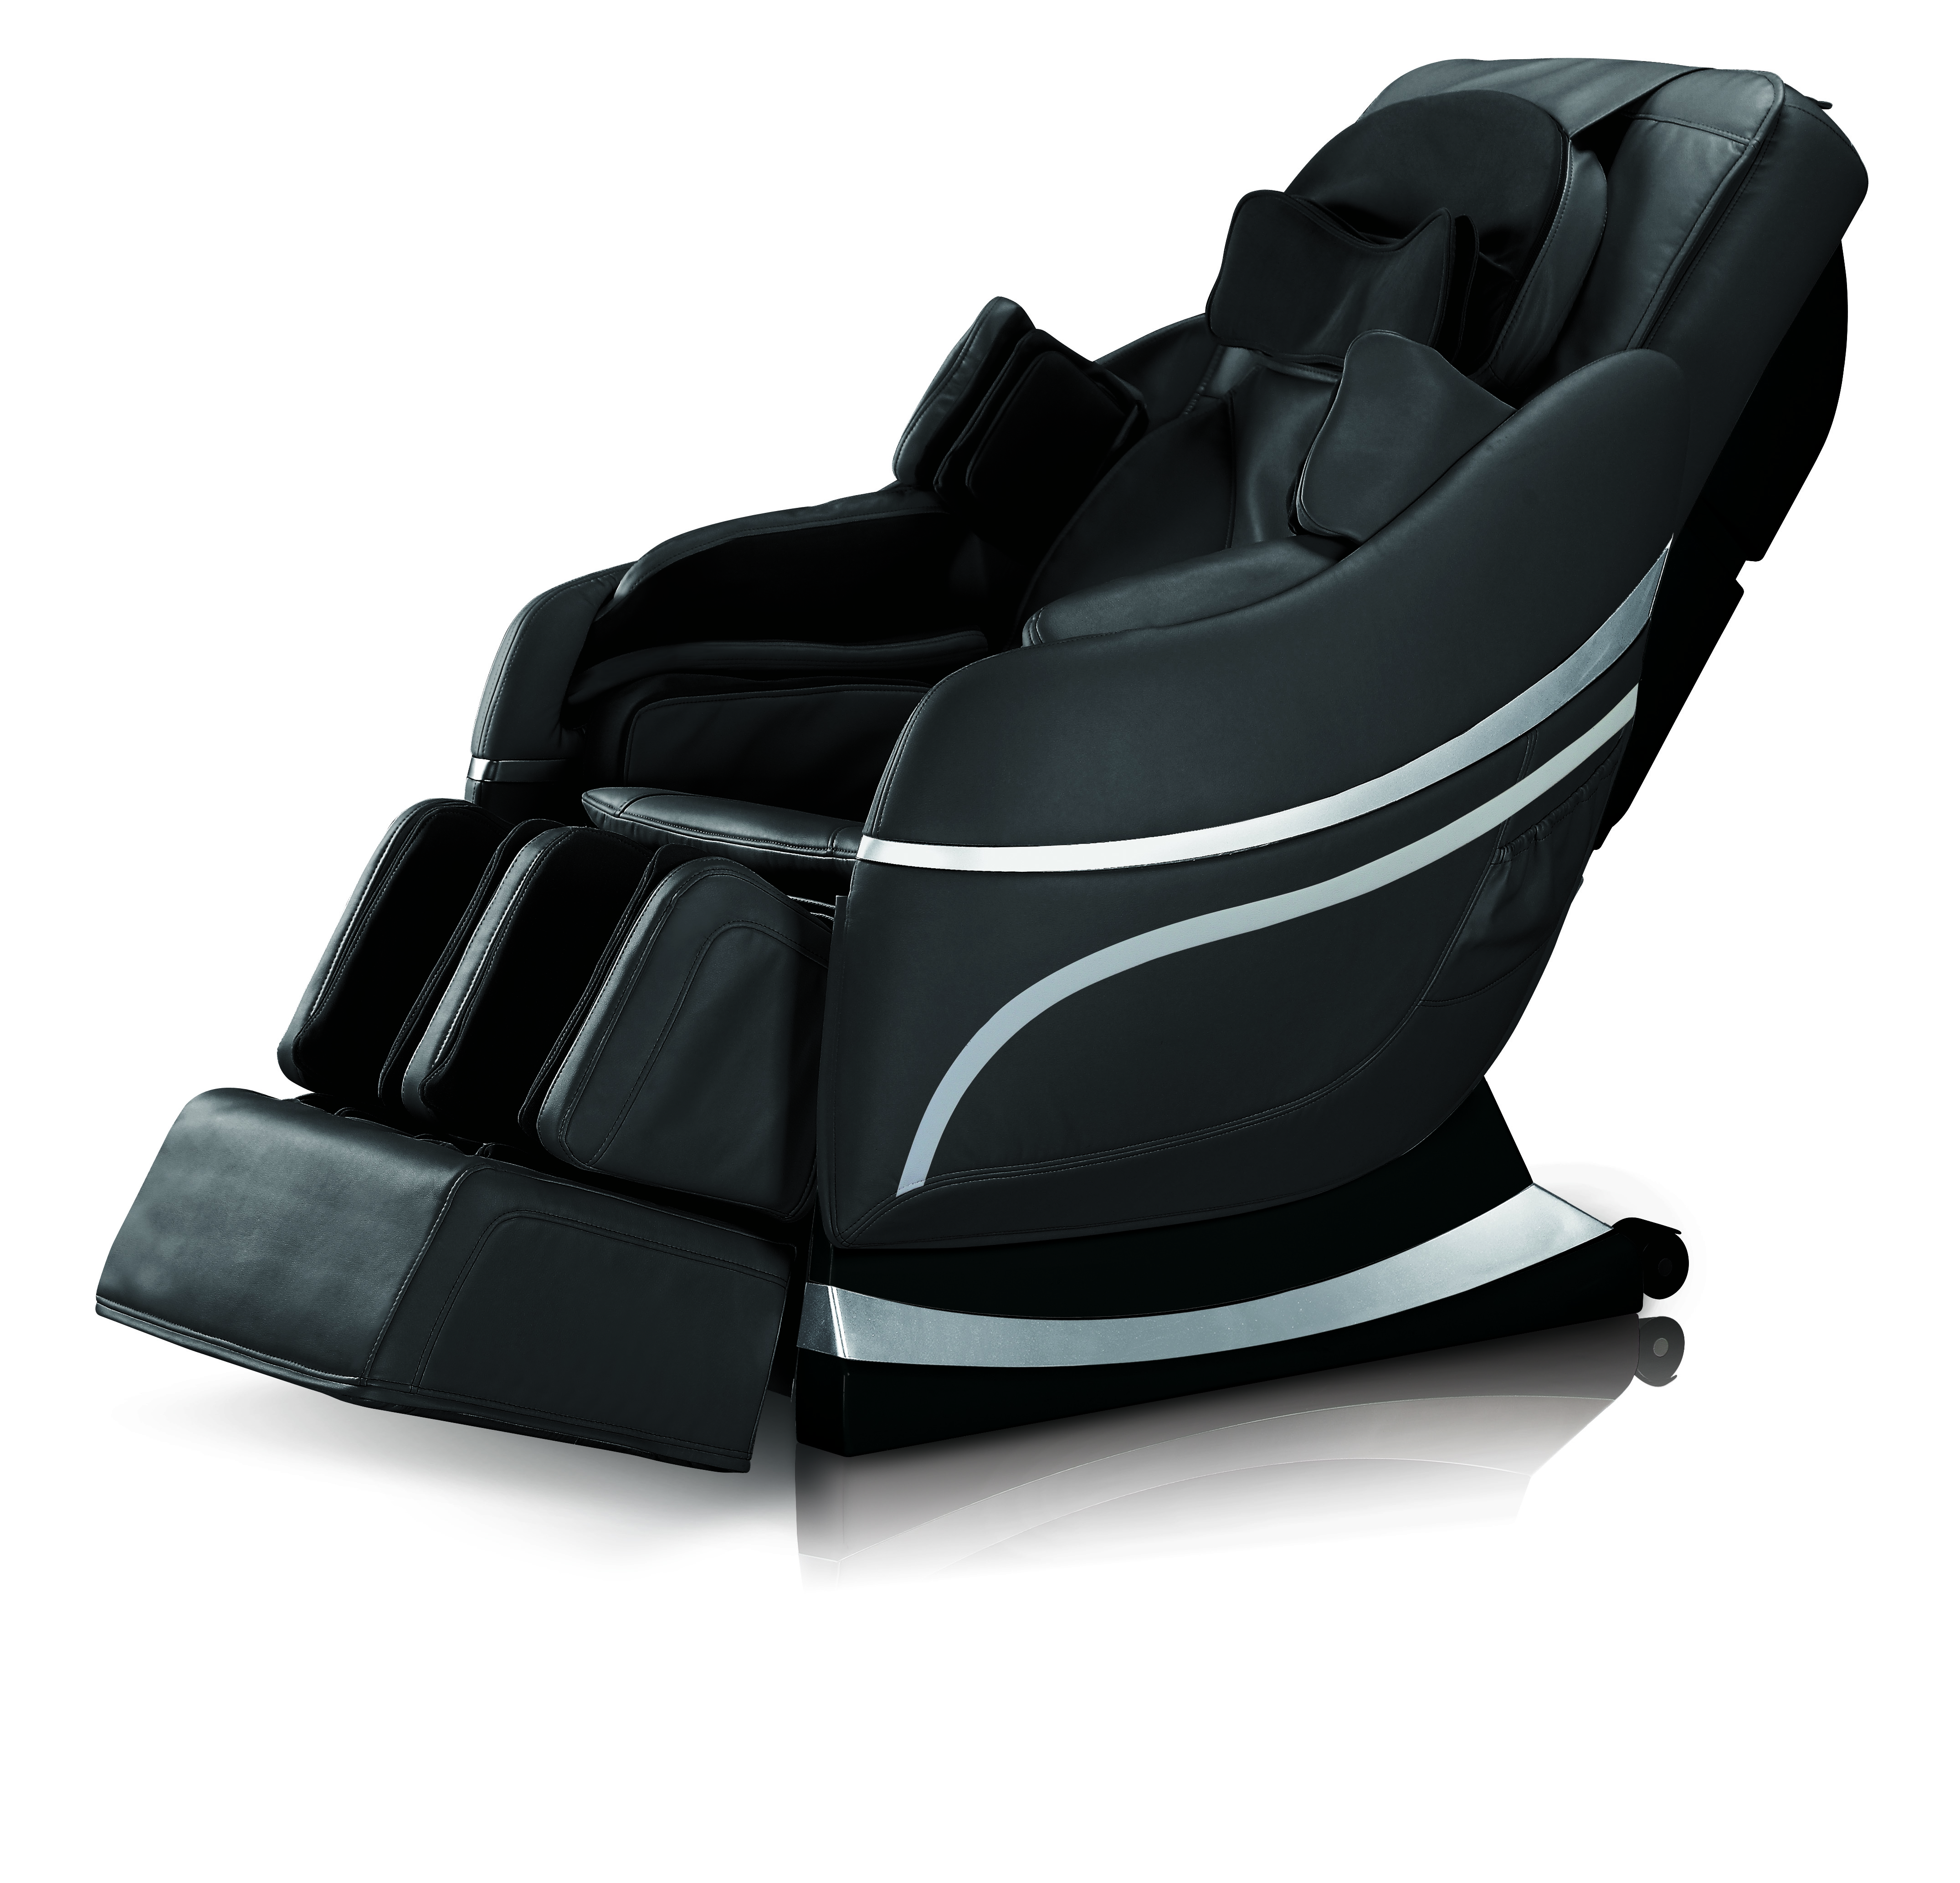 3D Zero Gravity Massage Chair - Model: A33 - Black